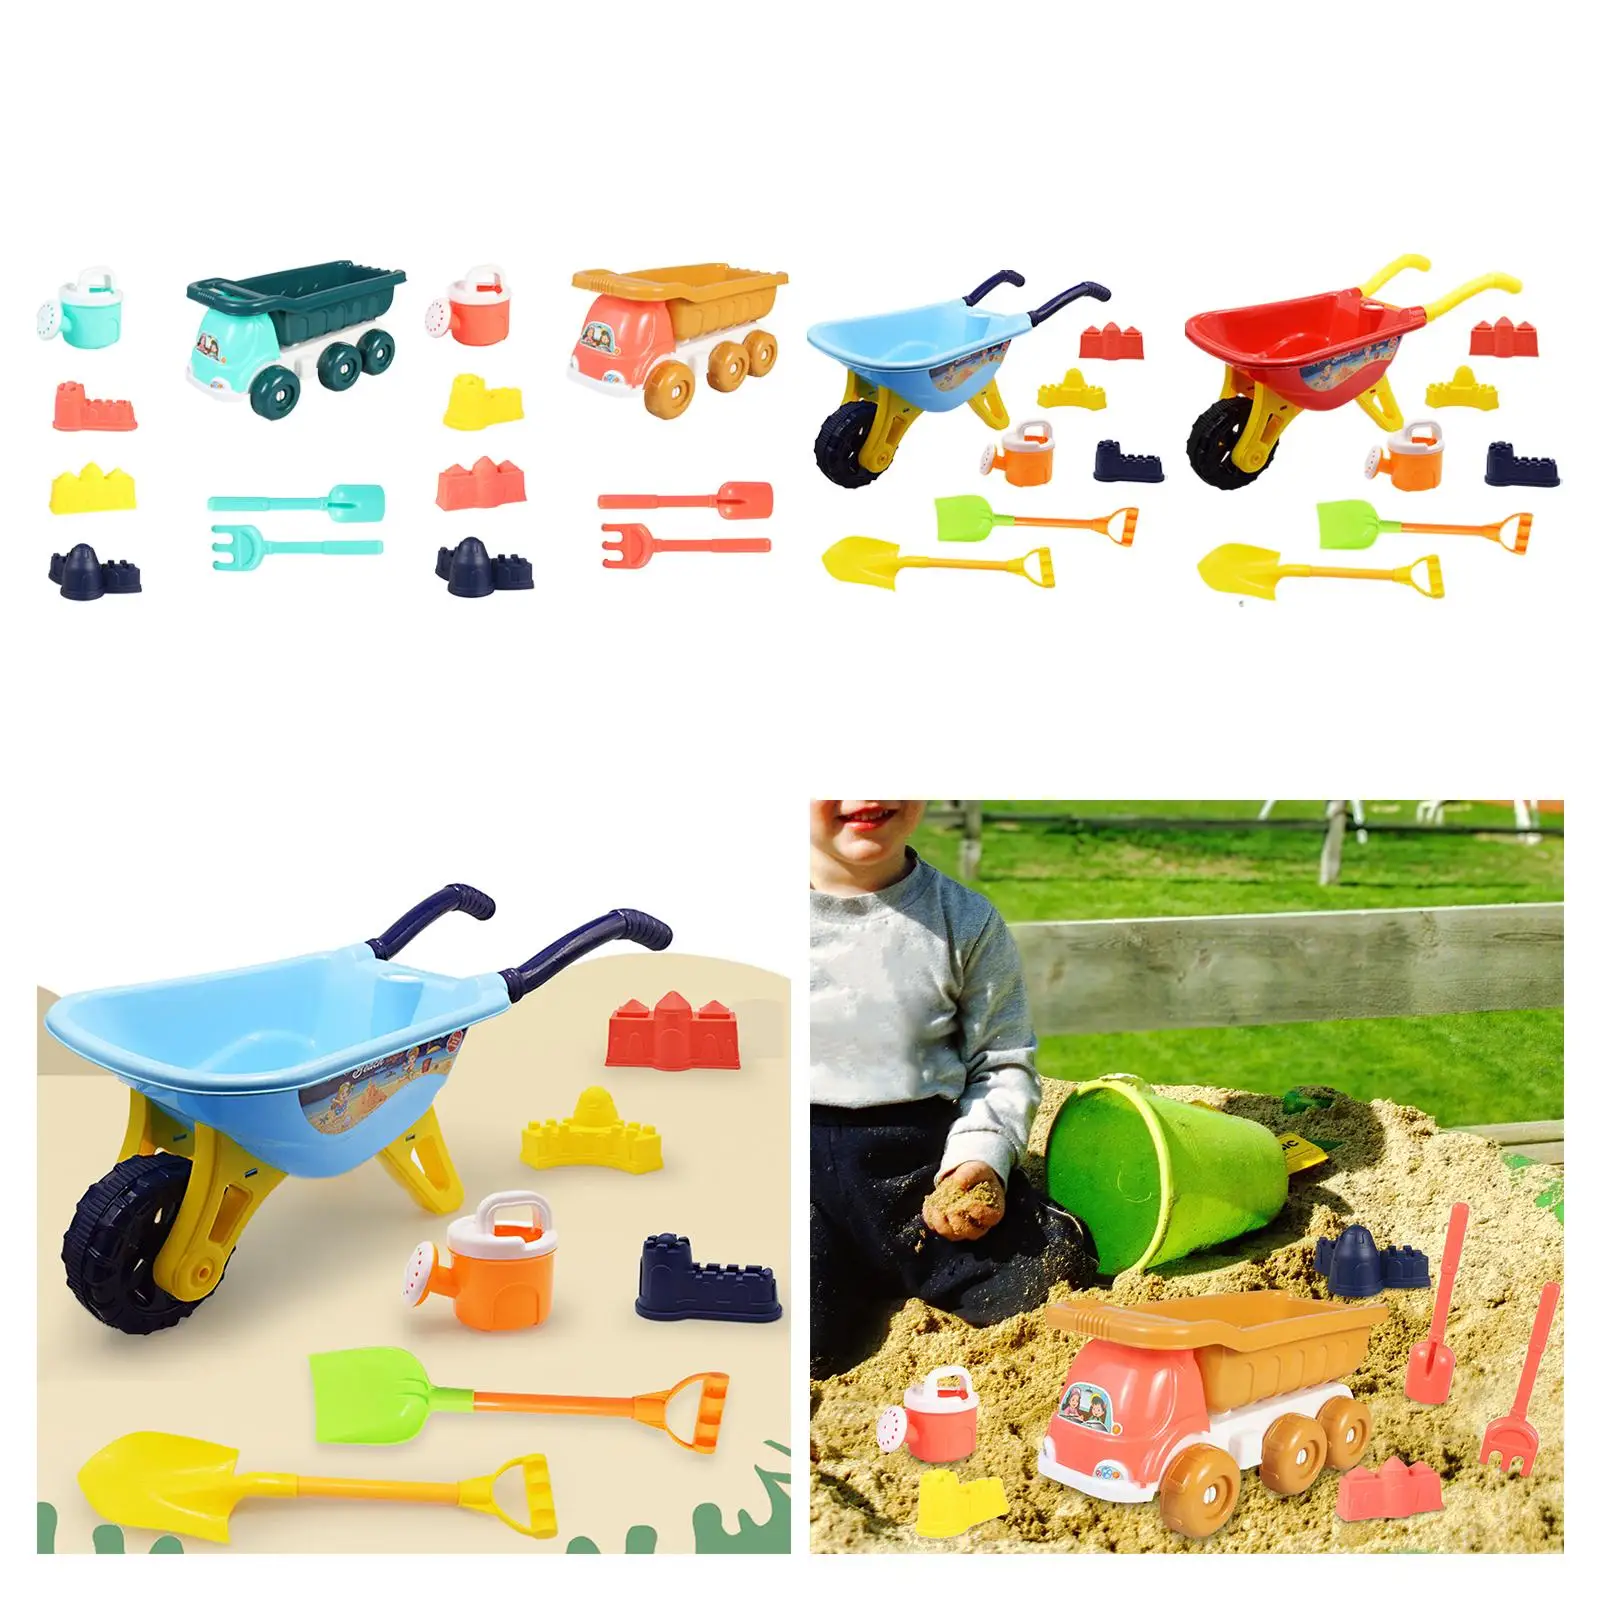 Beach beach Game play toy Sand Toy Set Beach Toy Set Wheelbarrow Gardening Tool Toy for Children Yard Indoor Outdoor Seaside